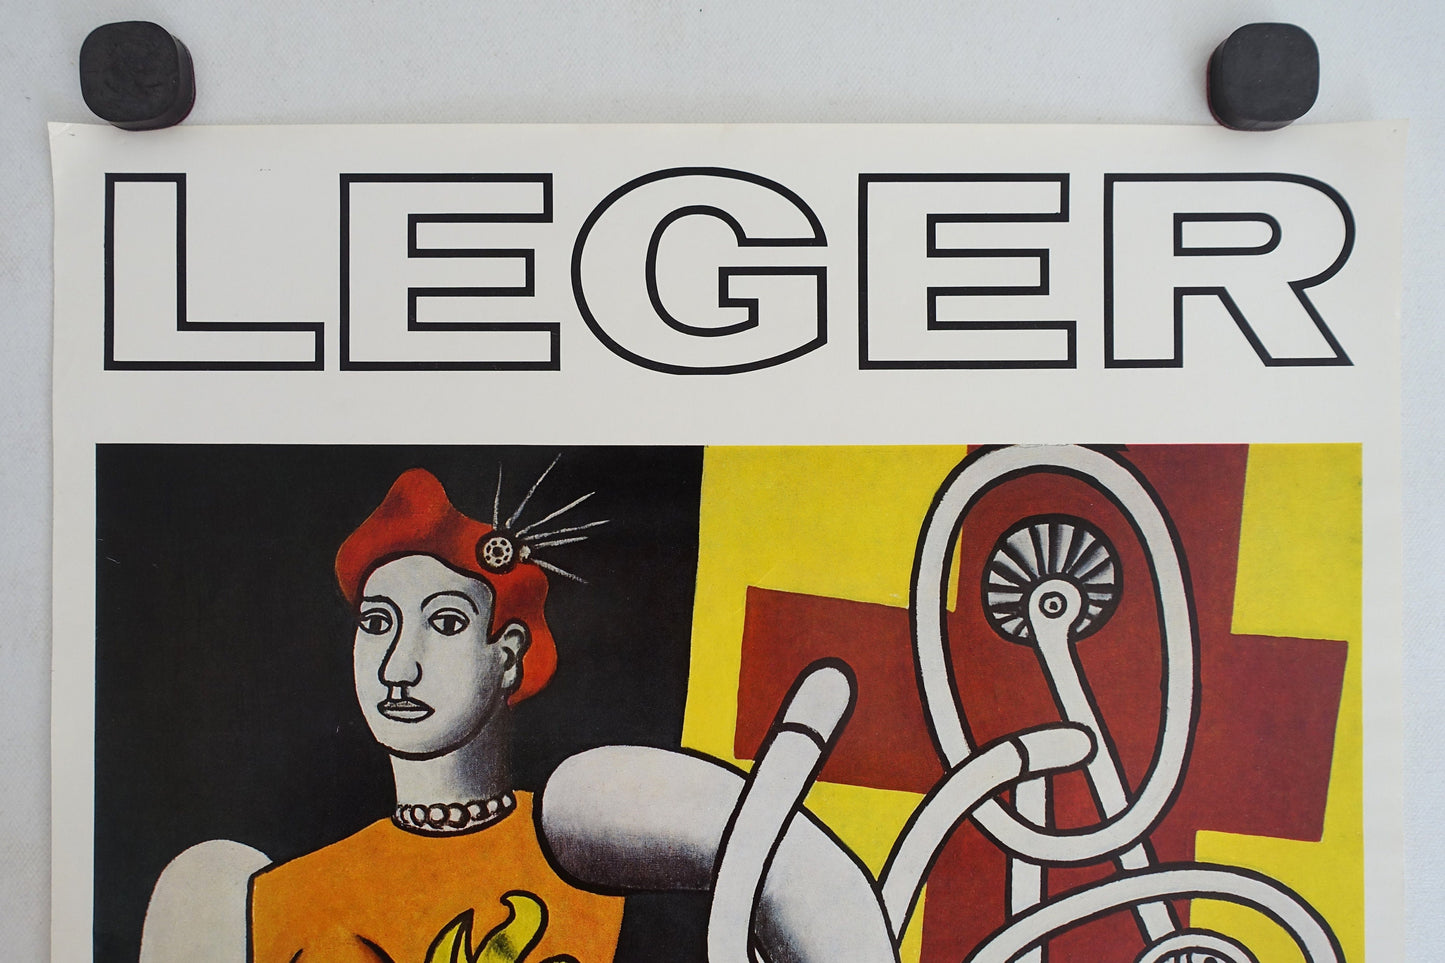 1971 Fernand Léger Exhibition at Grand Palais - Original Vintage Poster